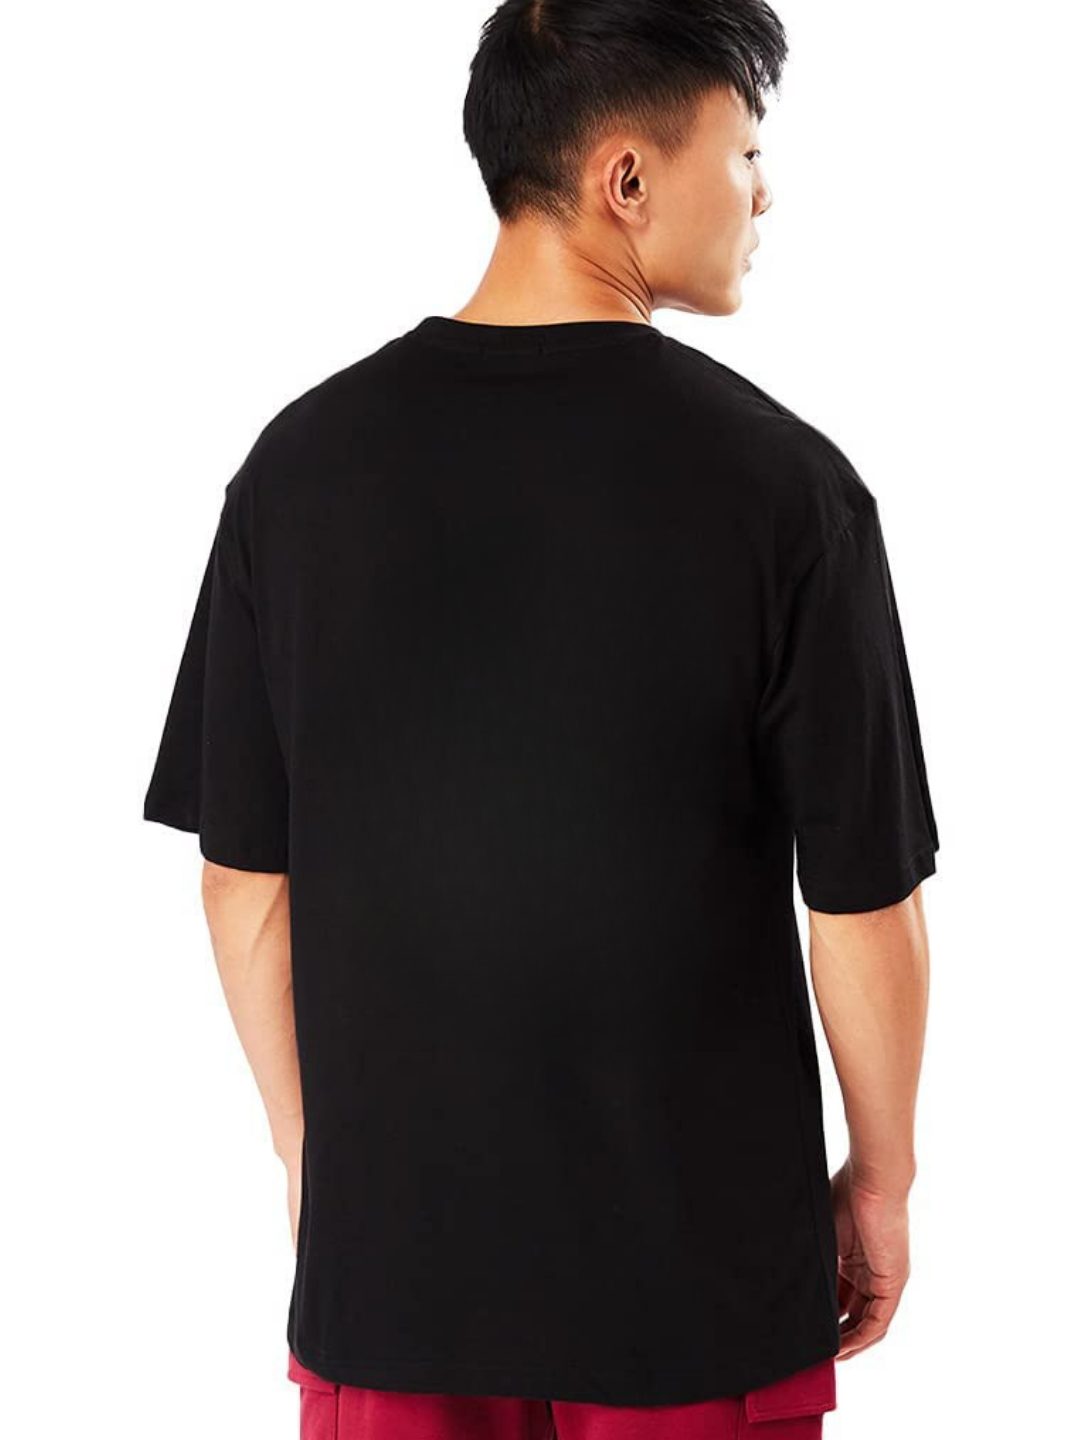 Gaming Zone Oversized T-Shirt - Black